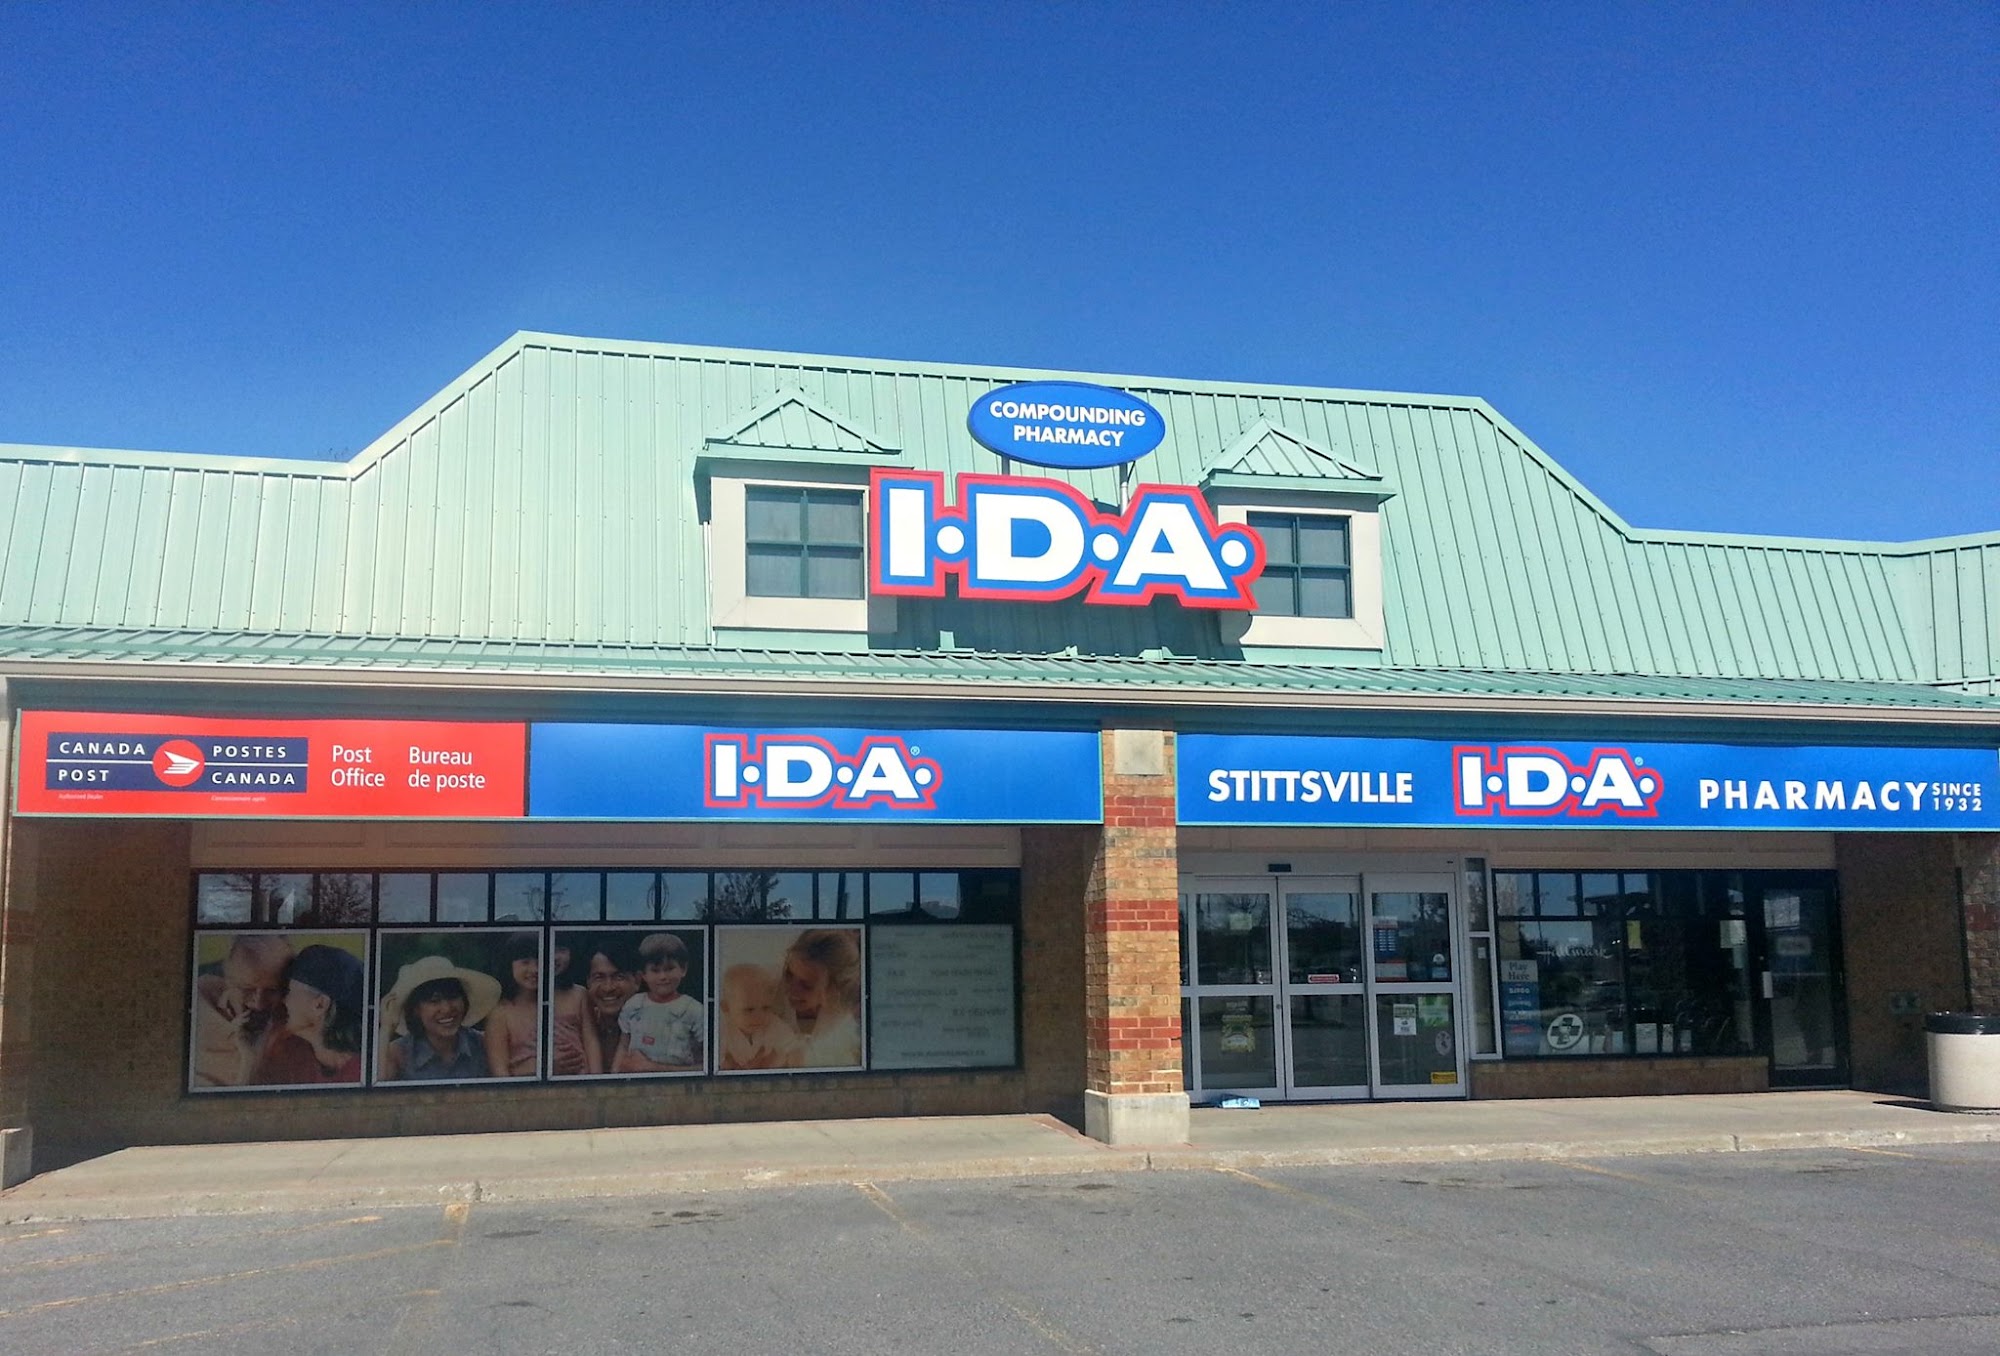 Stittsville IDA Compounding Pharmacy